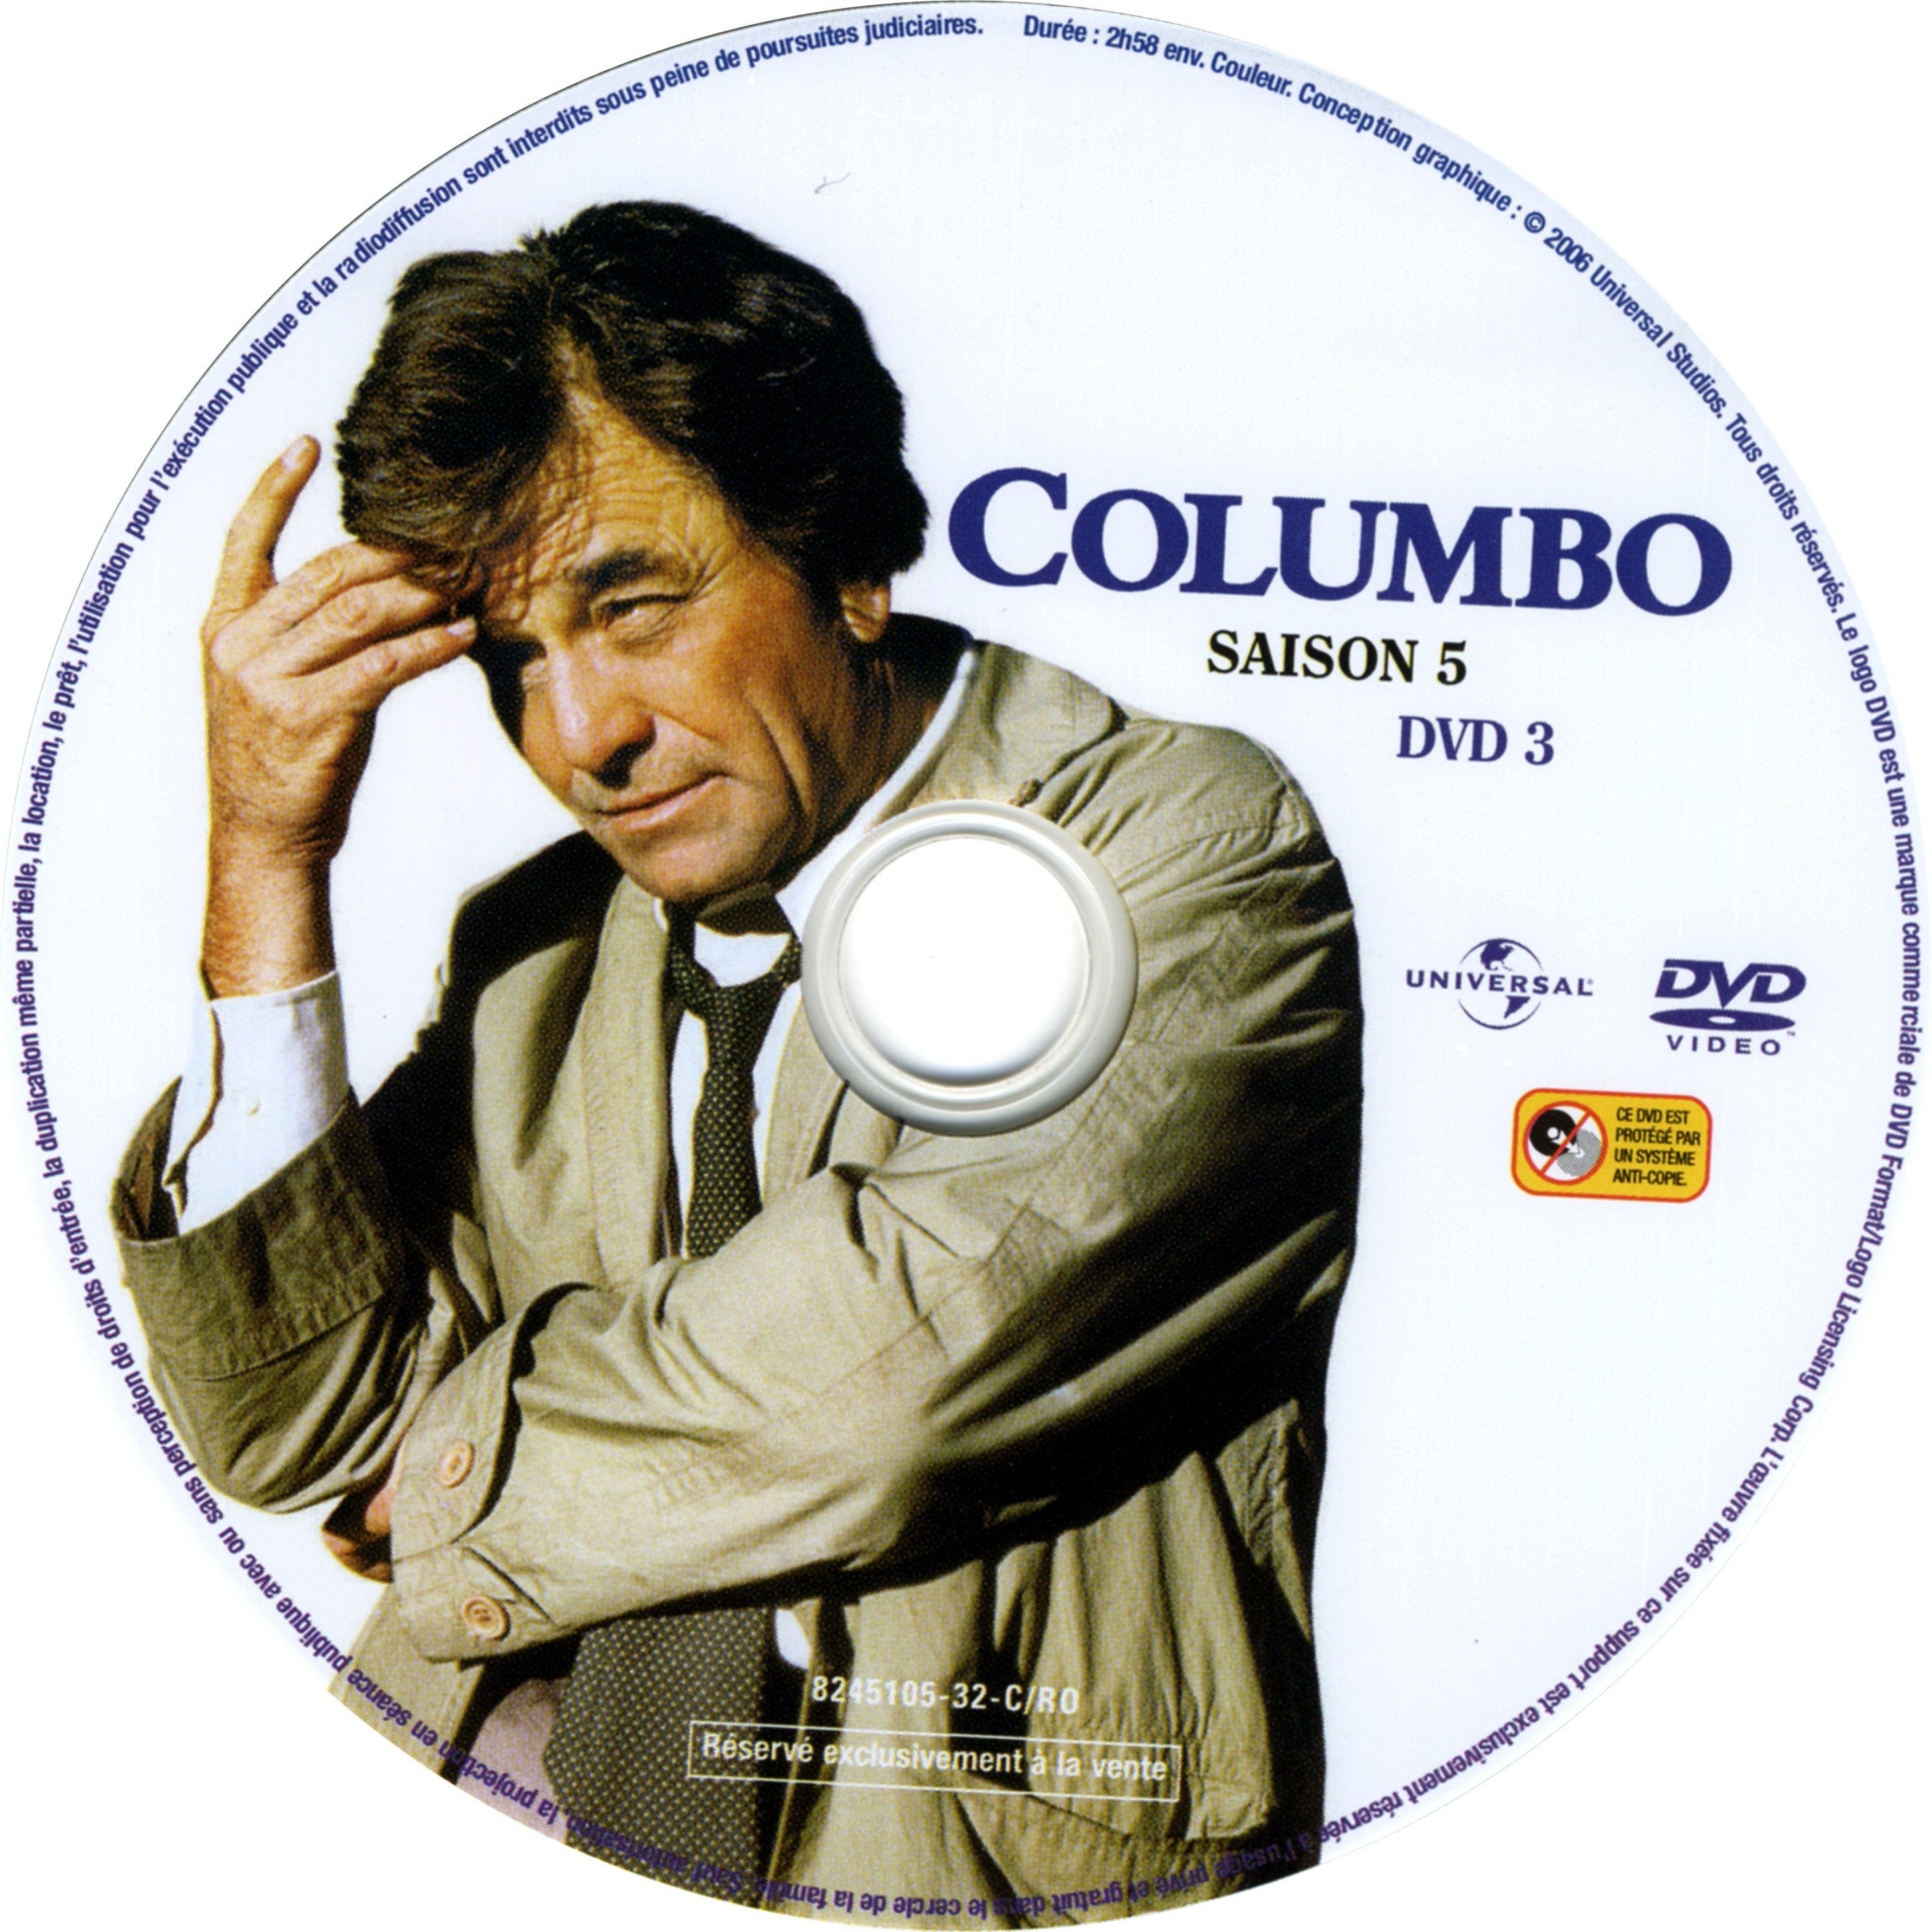 Columbo saison 5 DISC 3